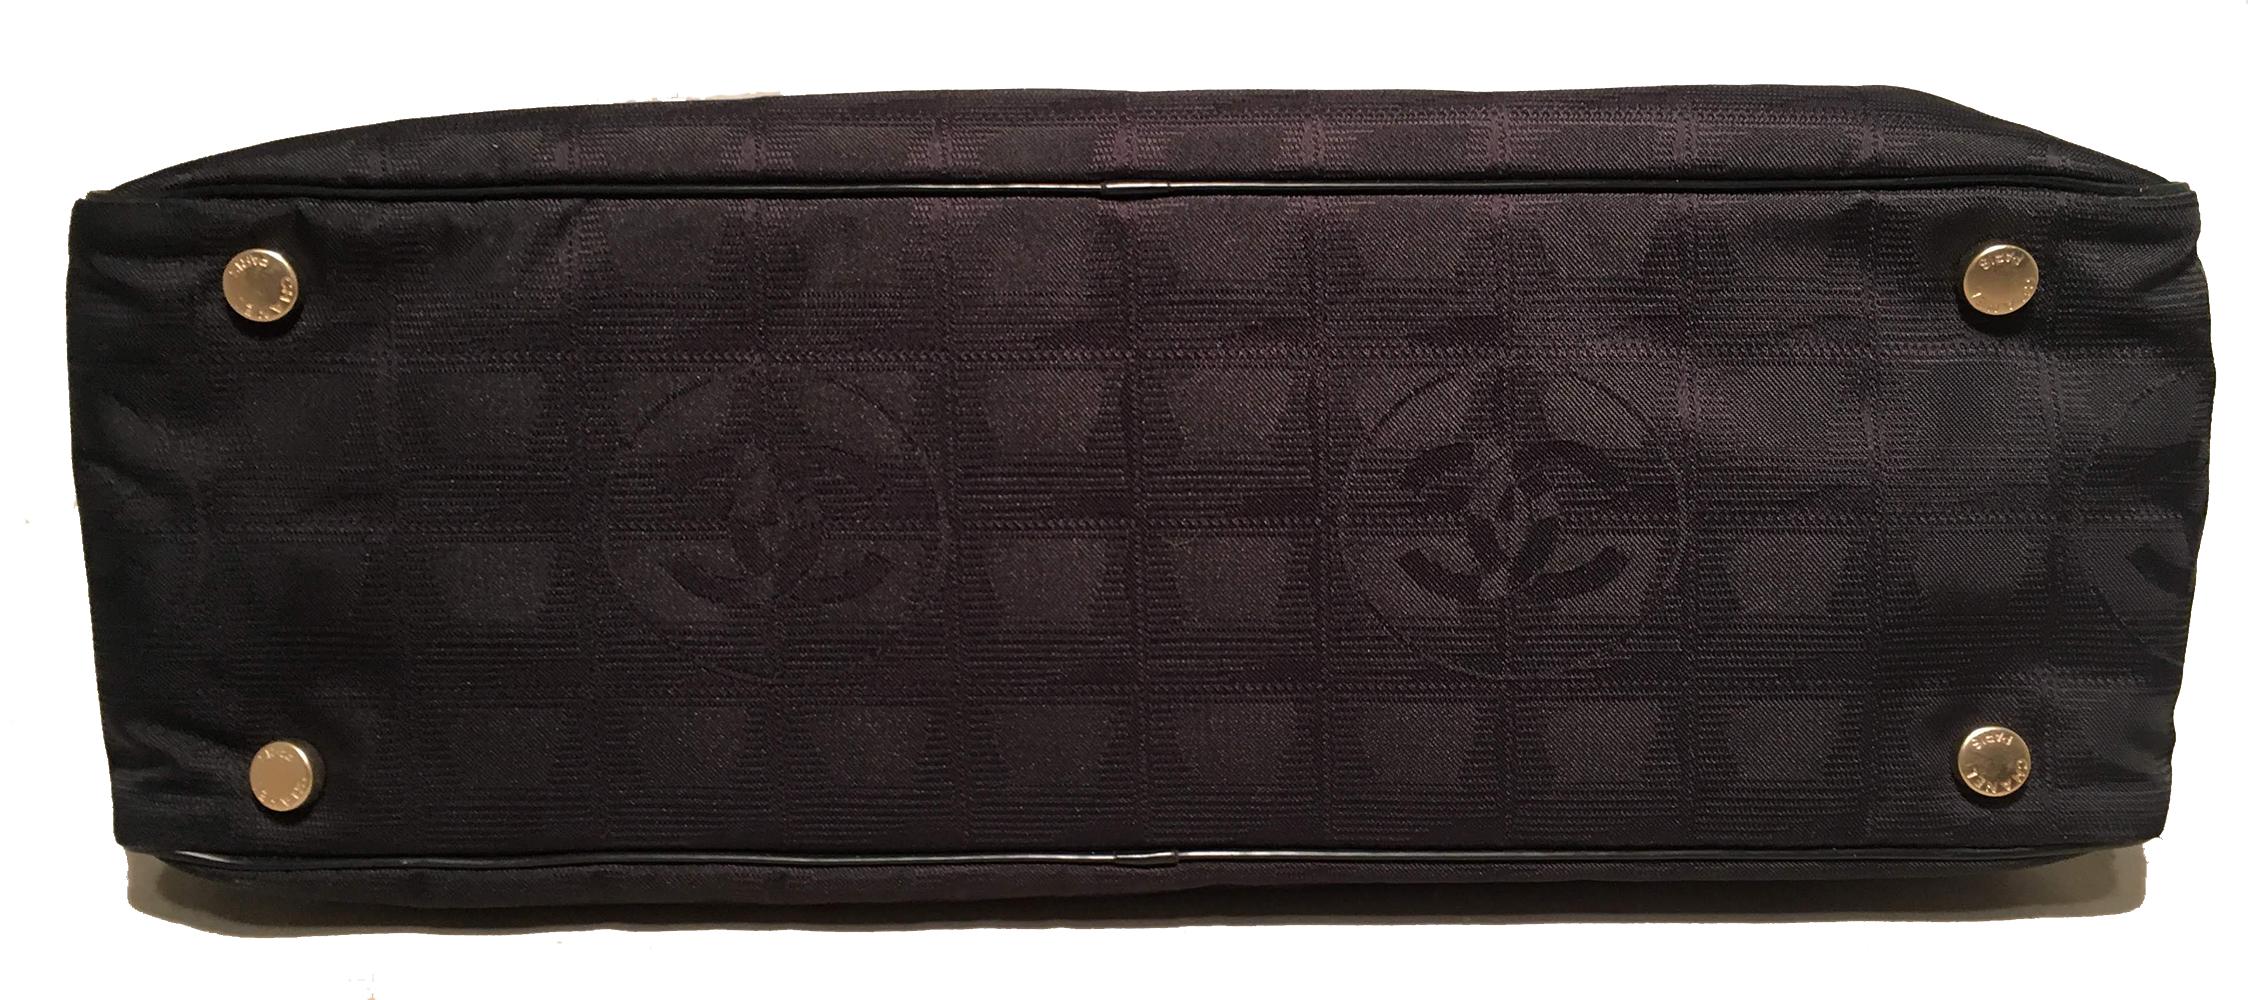 Chanel Black Nylon Traveline Handbag For Sale 1